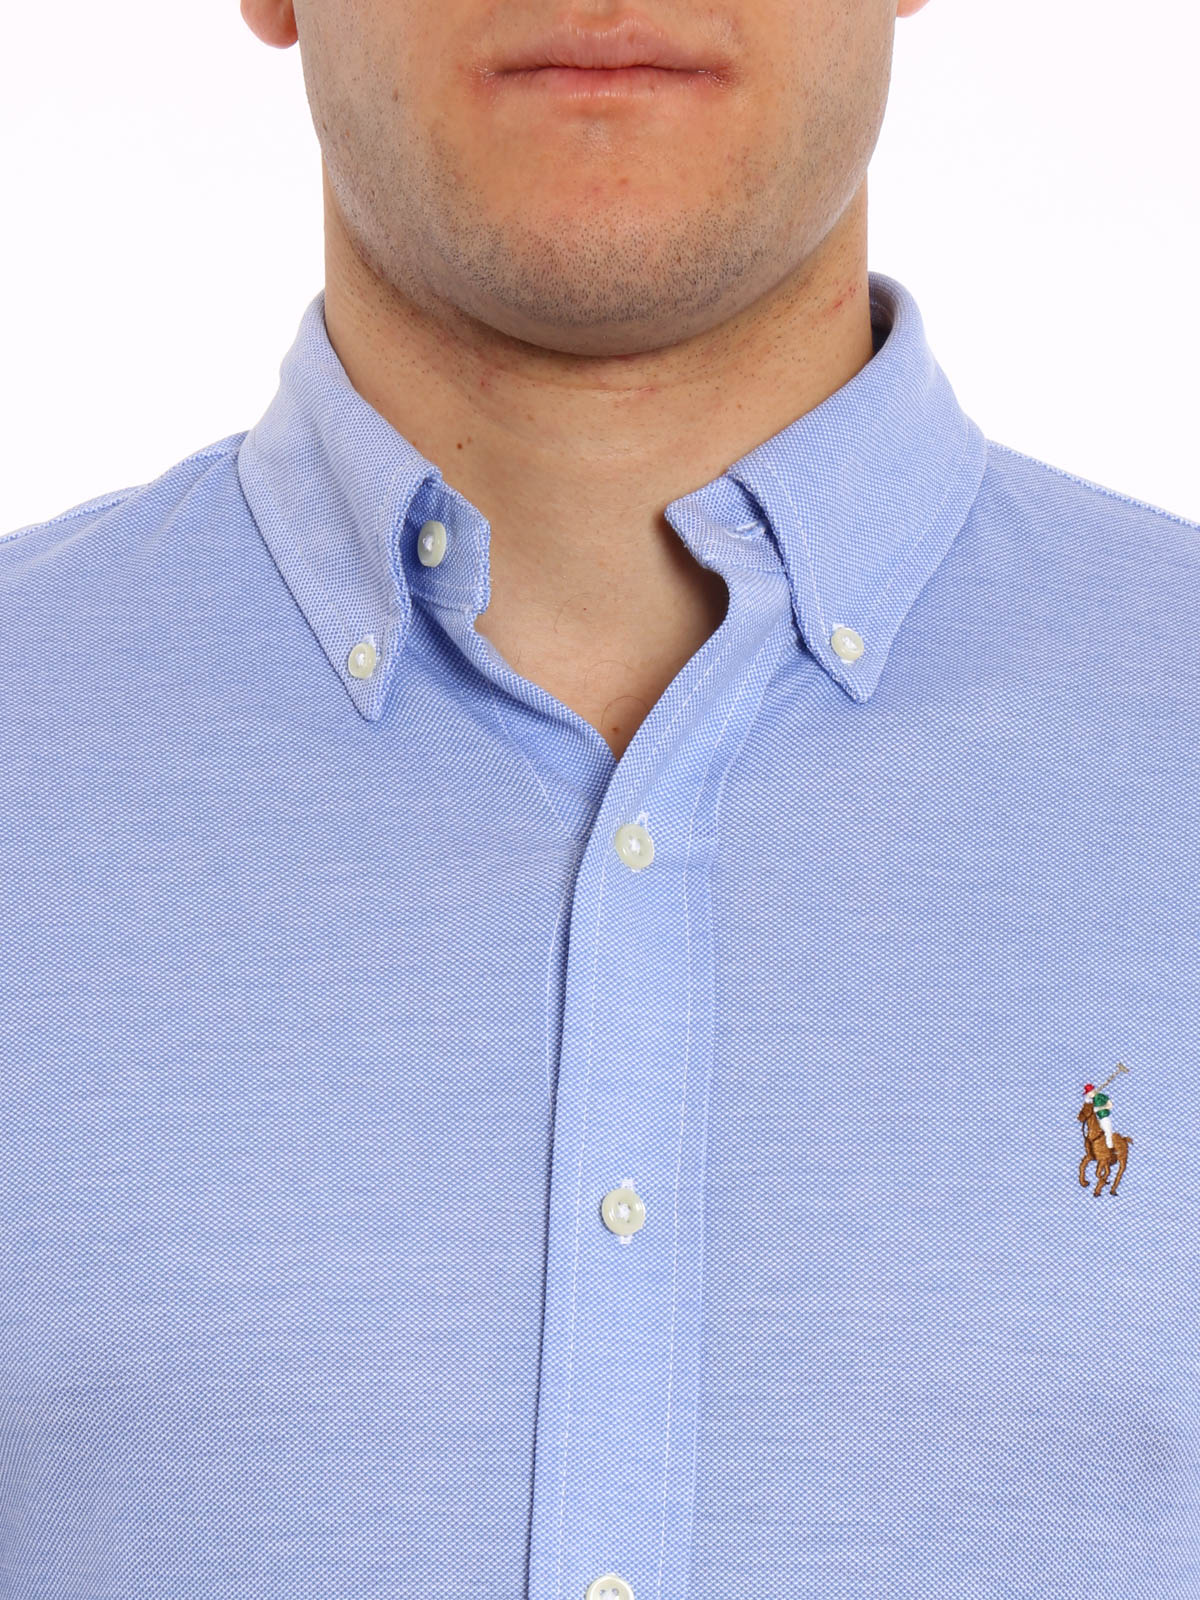 algodón vulgar Mucho Camisas Polo Ralph Lauren - Camisa Azul Para Hombre - A04WAA67C45AD4H75